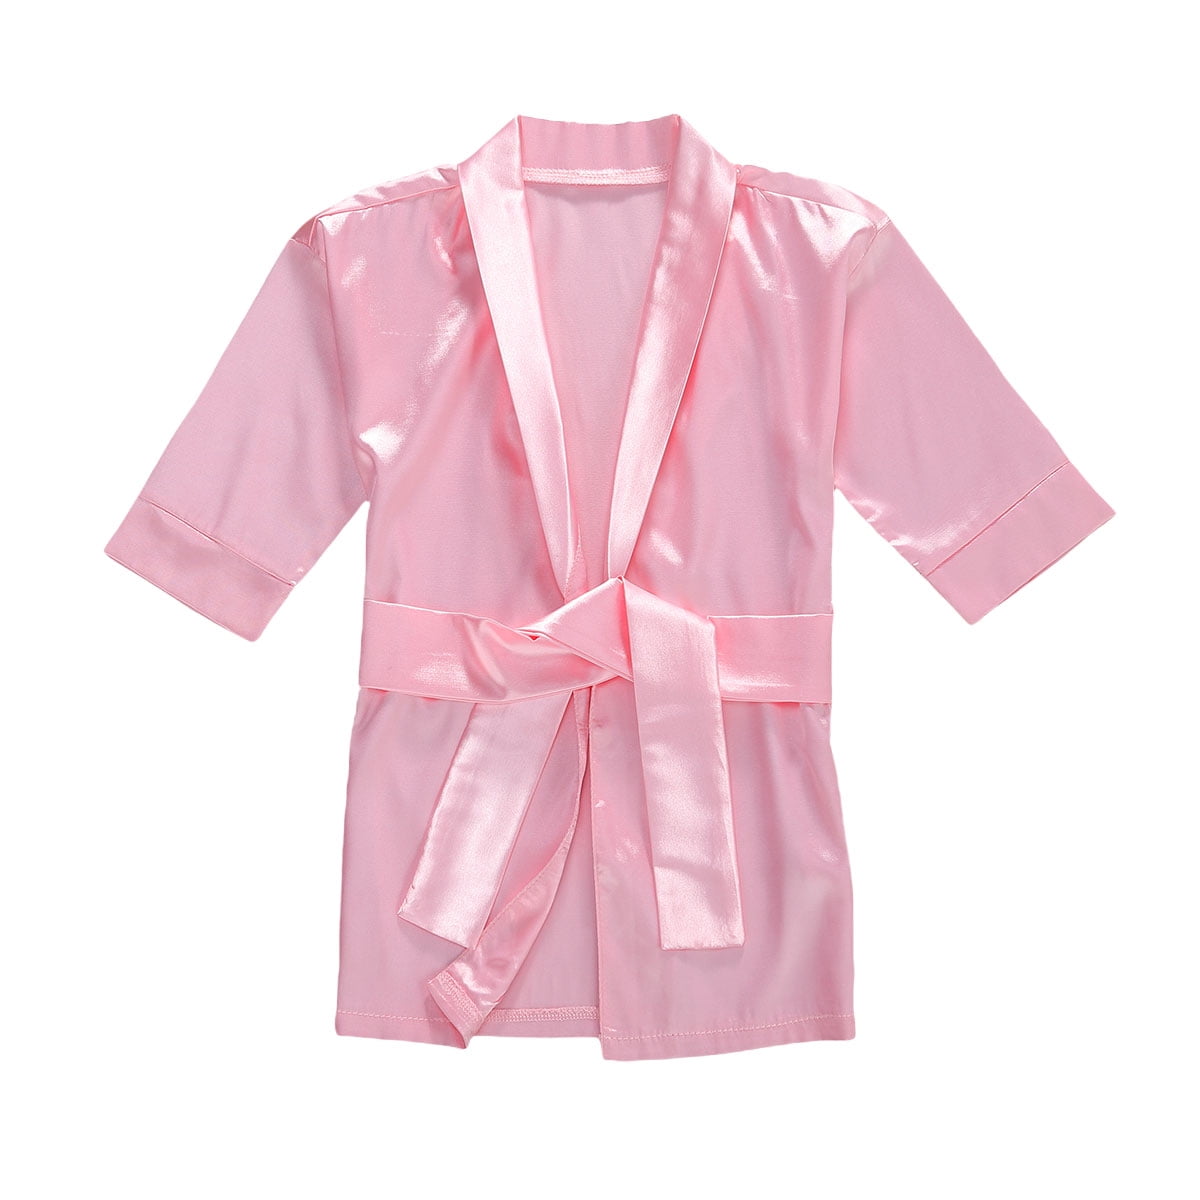 LZCYILANXIULSL Toddler Baby Girl Silk Satin Robes Nightgowns Kimono Dress Kids Pajamas Sleepwear Outfit Cute Clothes